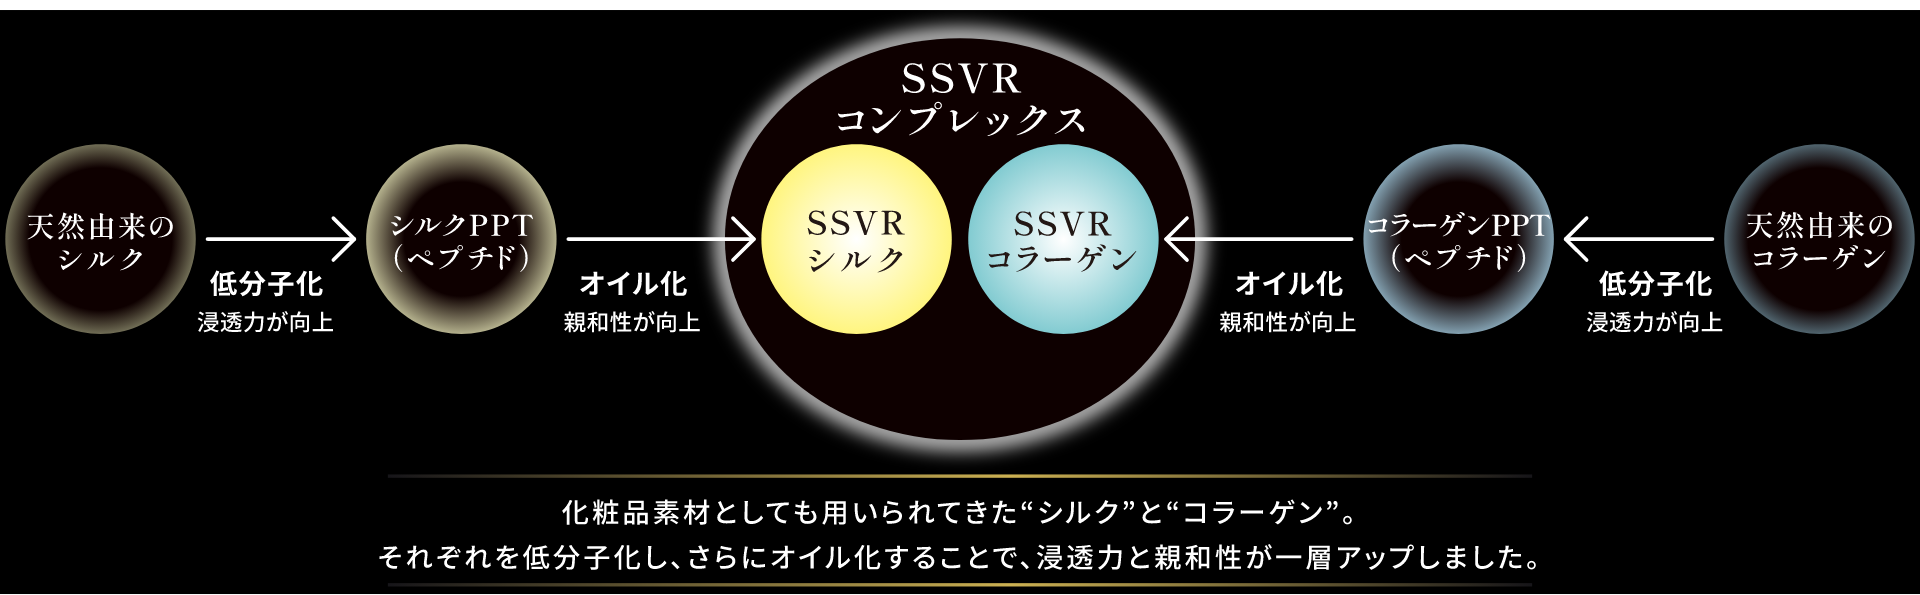 SSVRコンプレックス